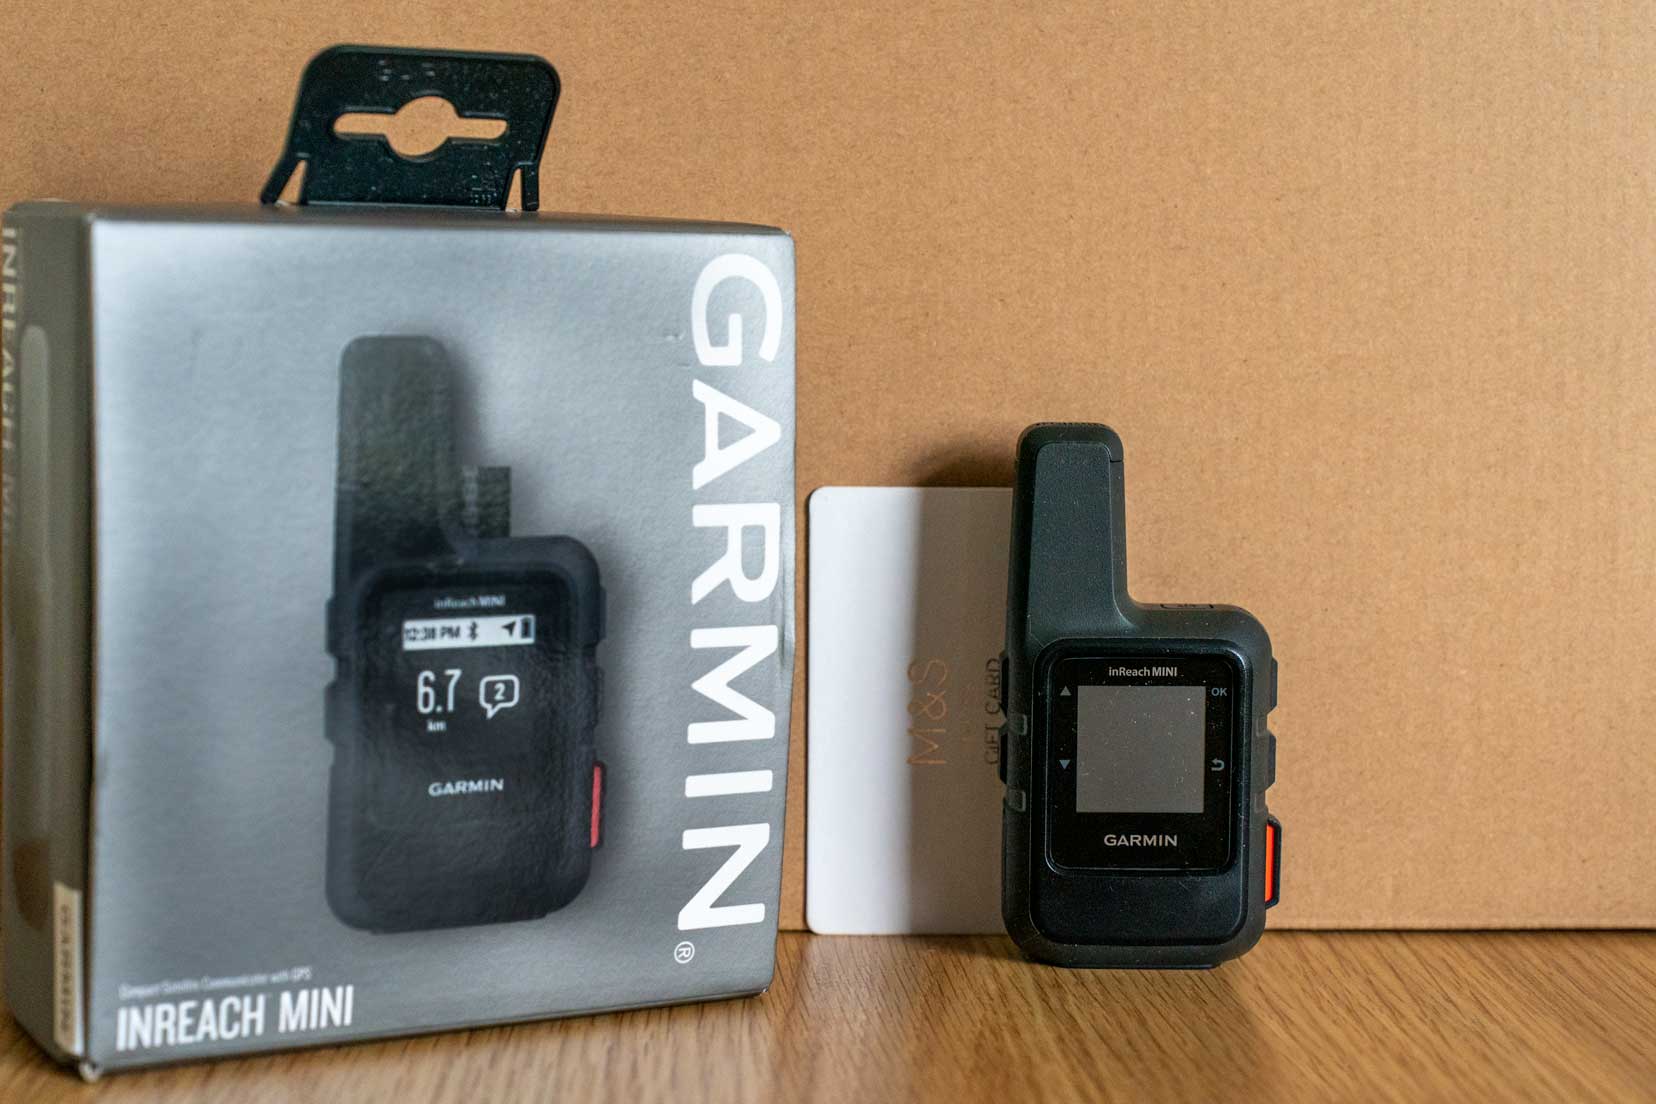 Garmin InReach Mini - useful for out of wifi range road trips